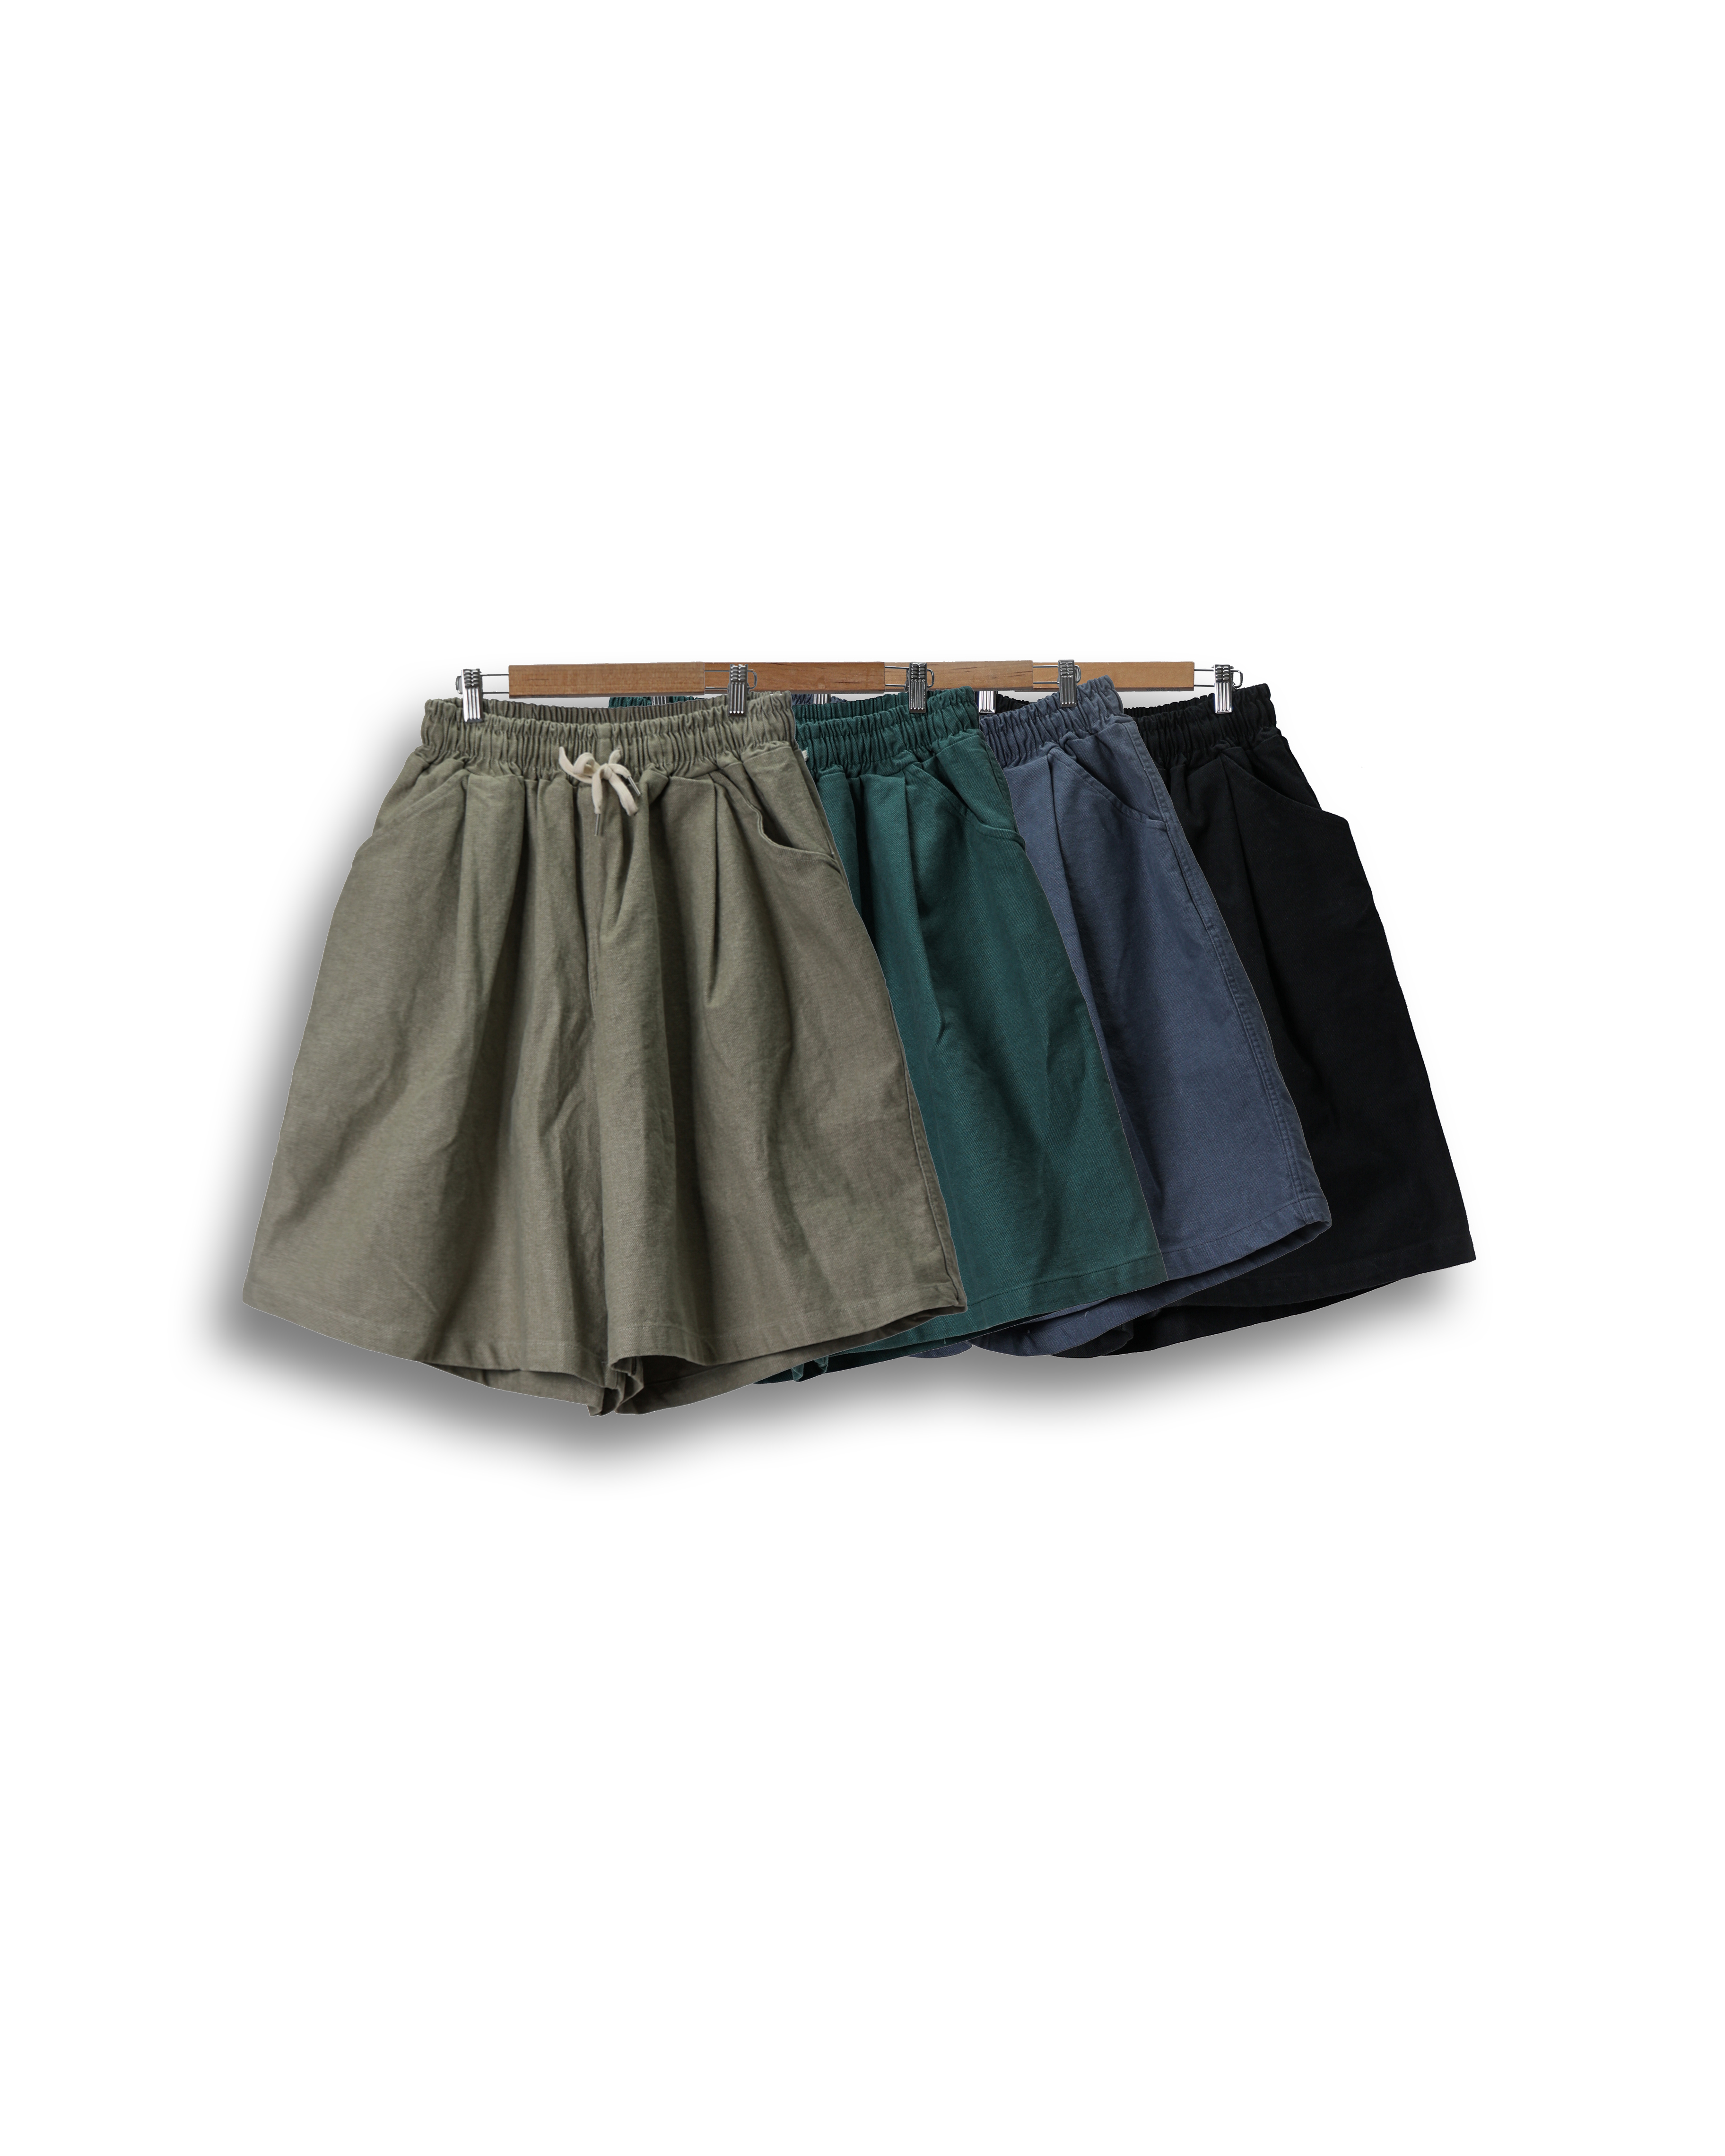 PERCNT Seven Wide Easy Half Pants (Black/Navy/Green/Beige) - 5차 리오더 (4/30 배송예정)